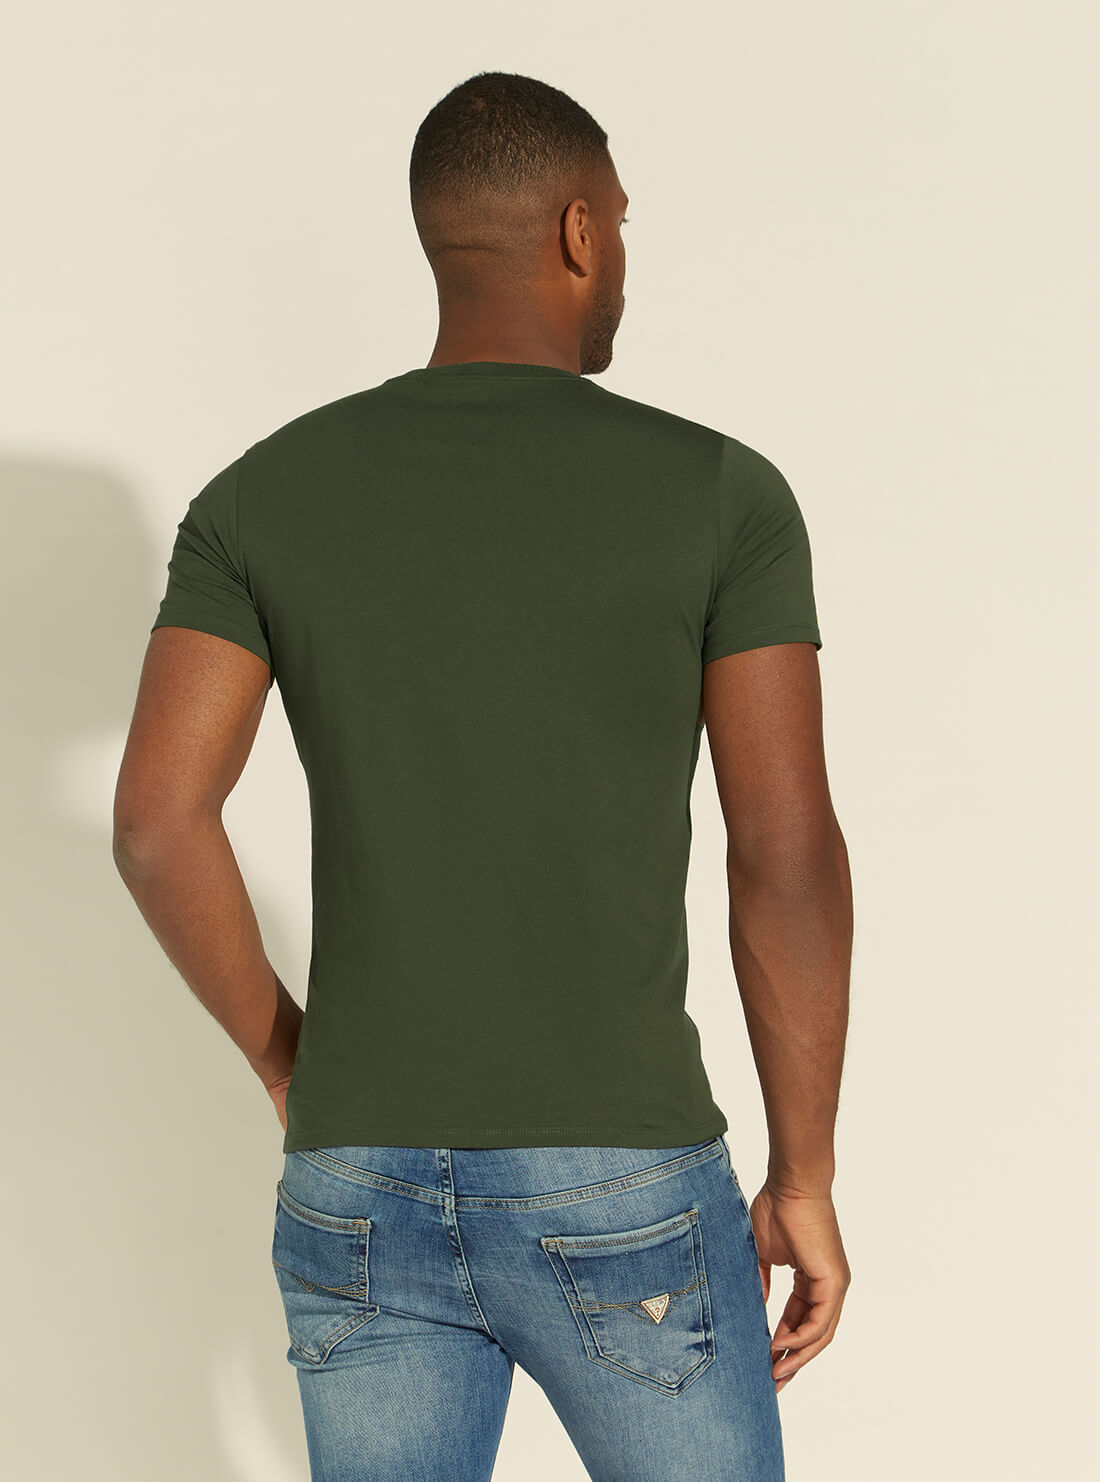 GUESS Mens Olive Slim Fit Logo T-Shirt M1RI36I3Z11 Back View